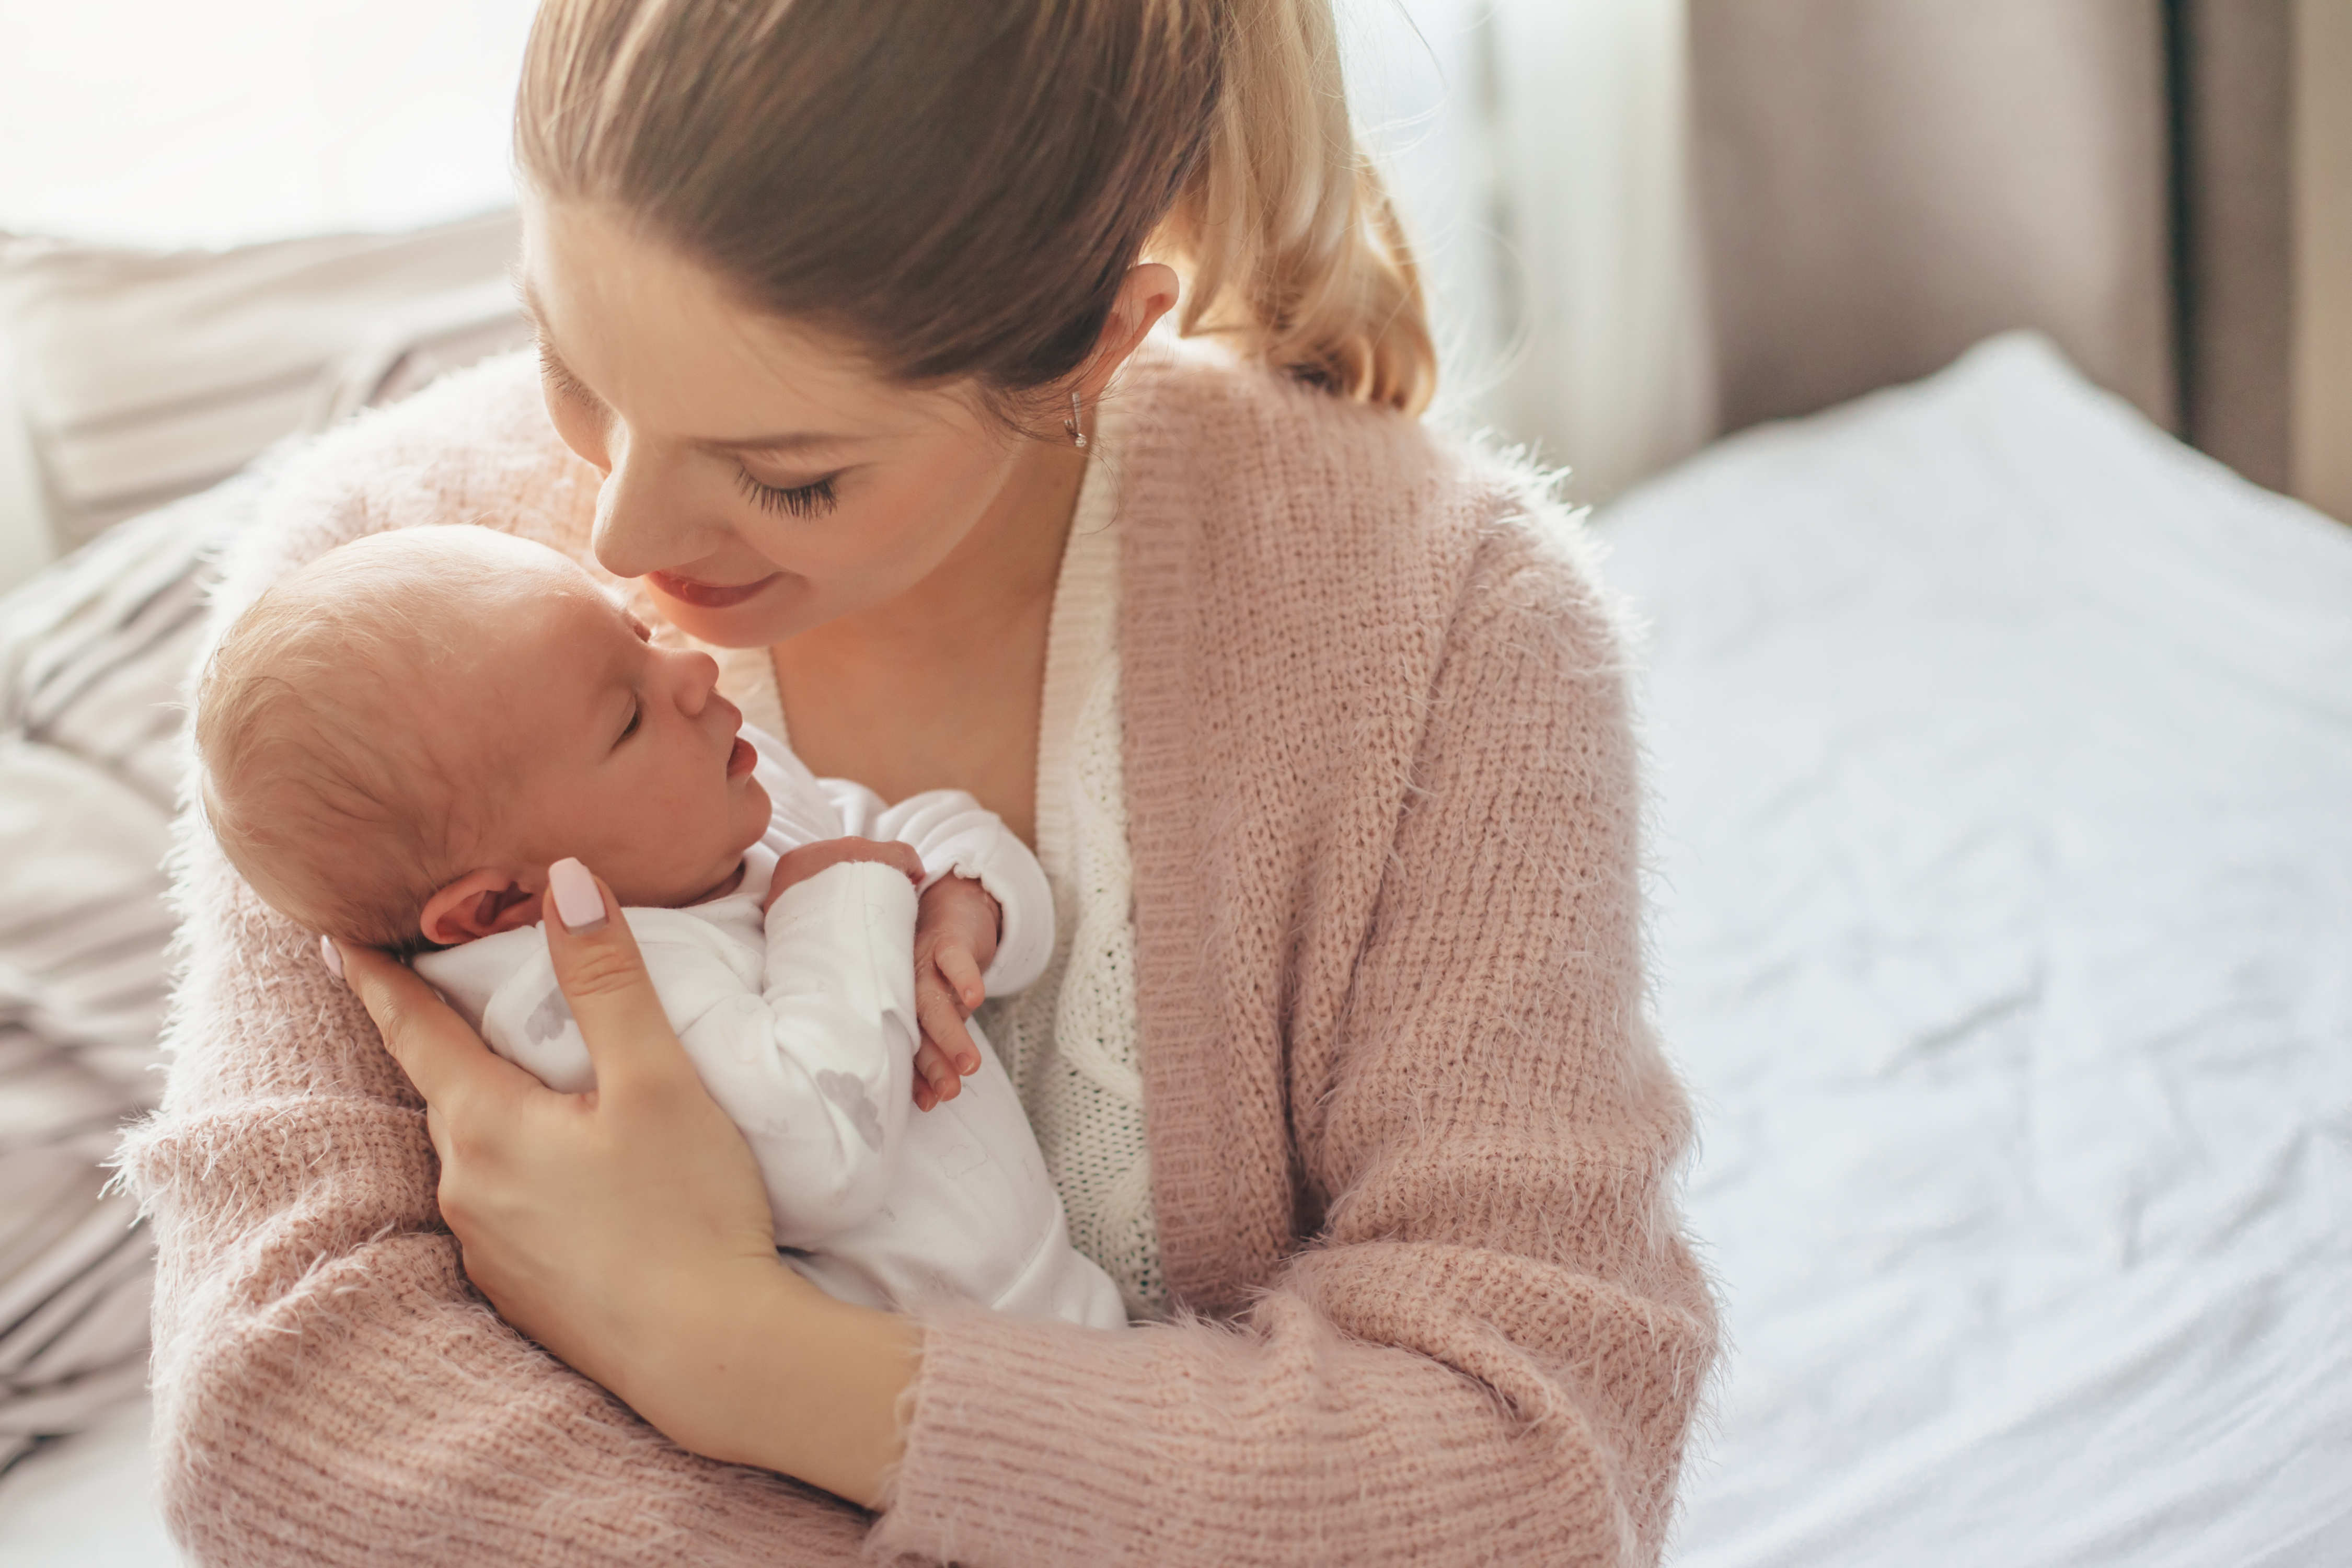 Mother holding her newborn baby | Source: Shutterstock